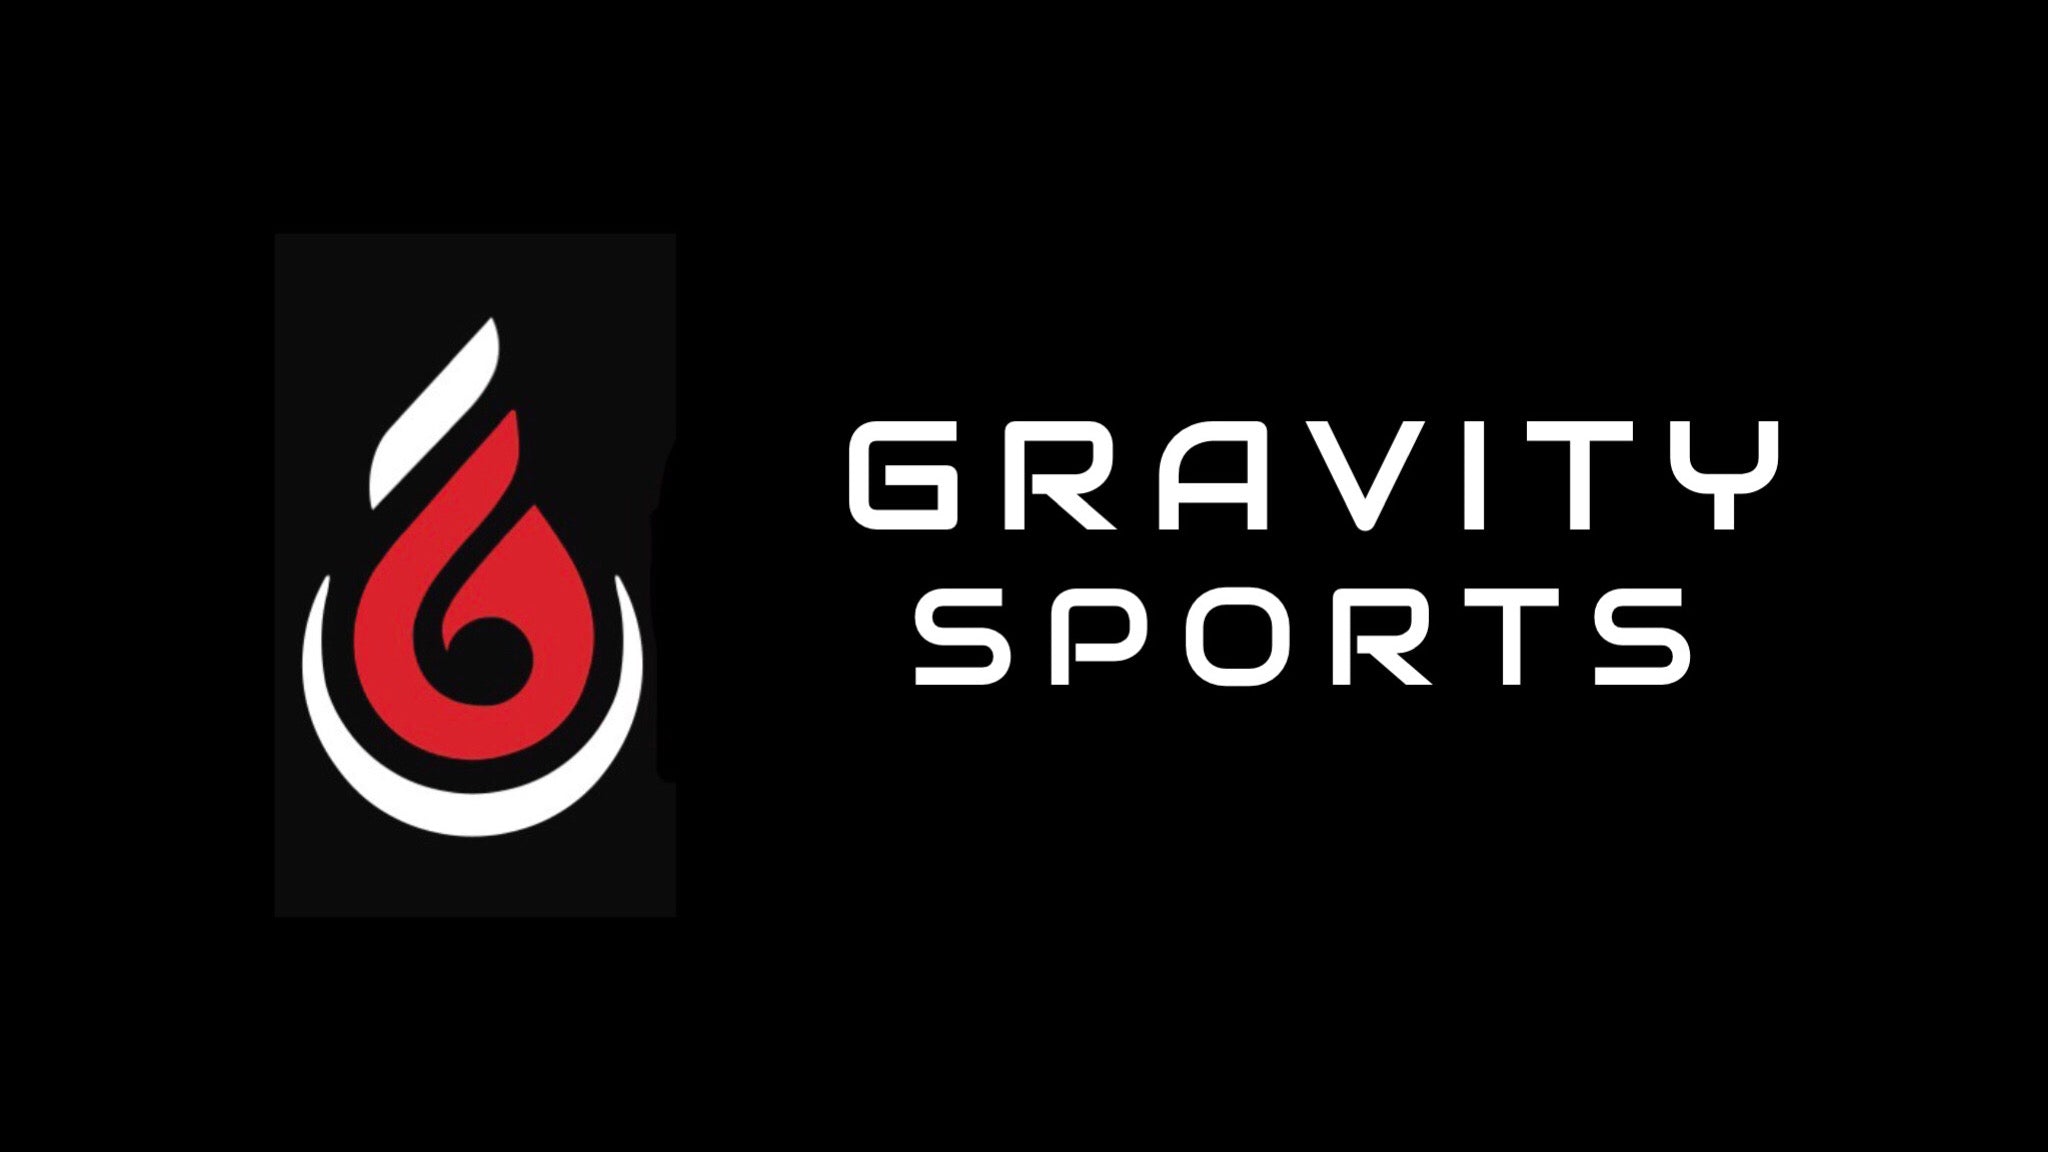 Gravity sport